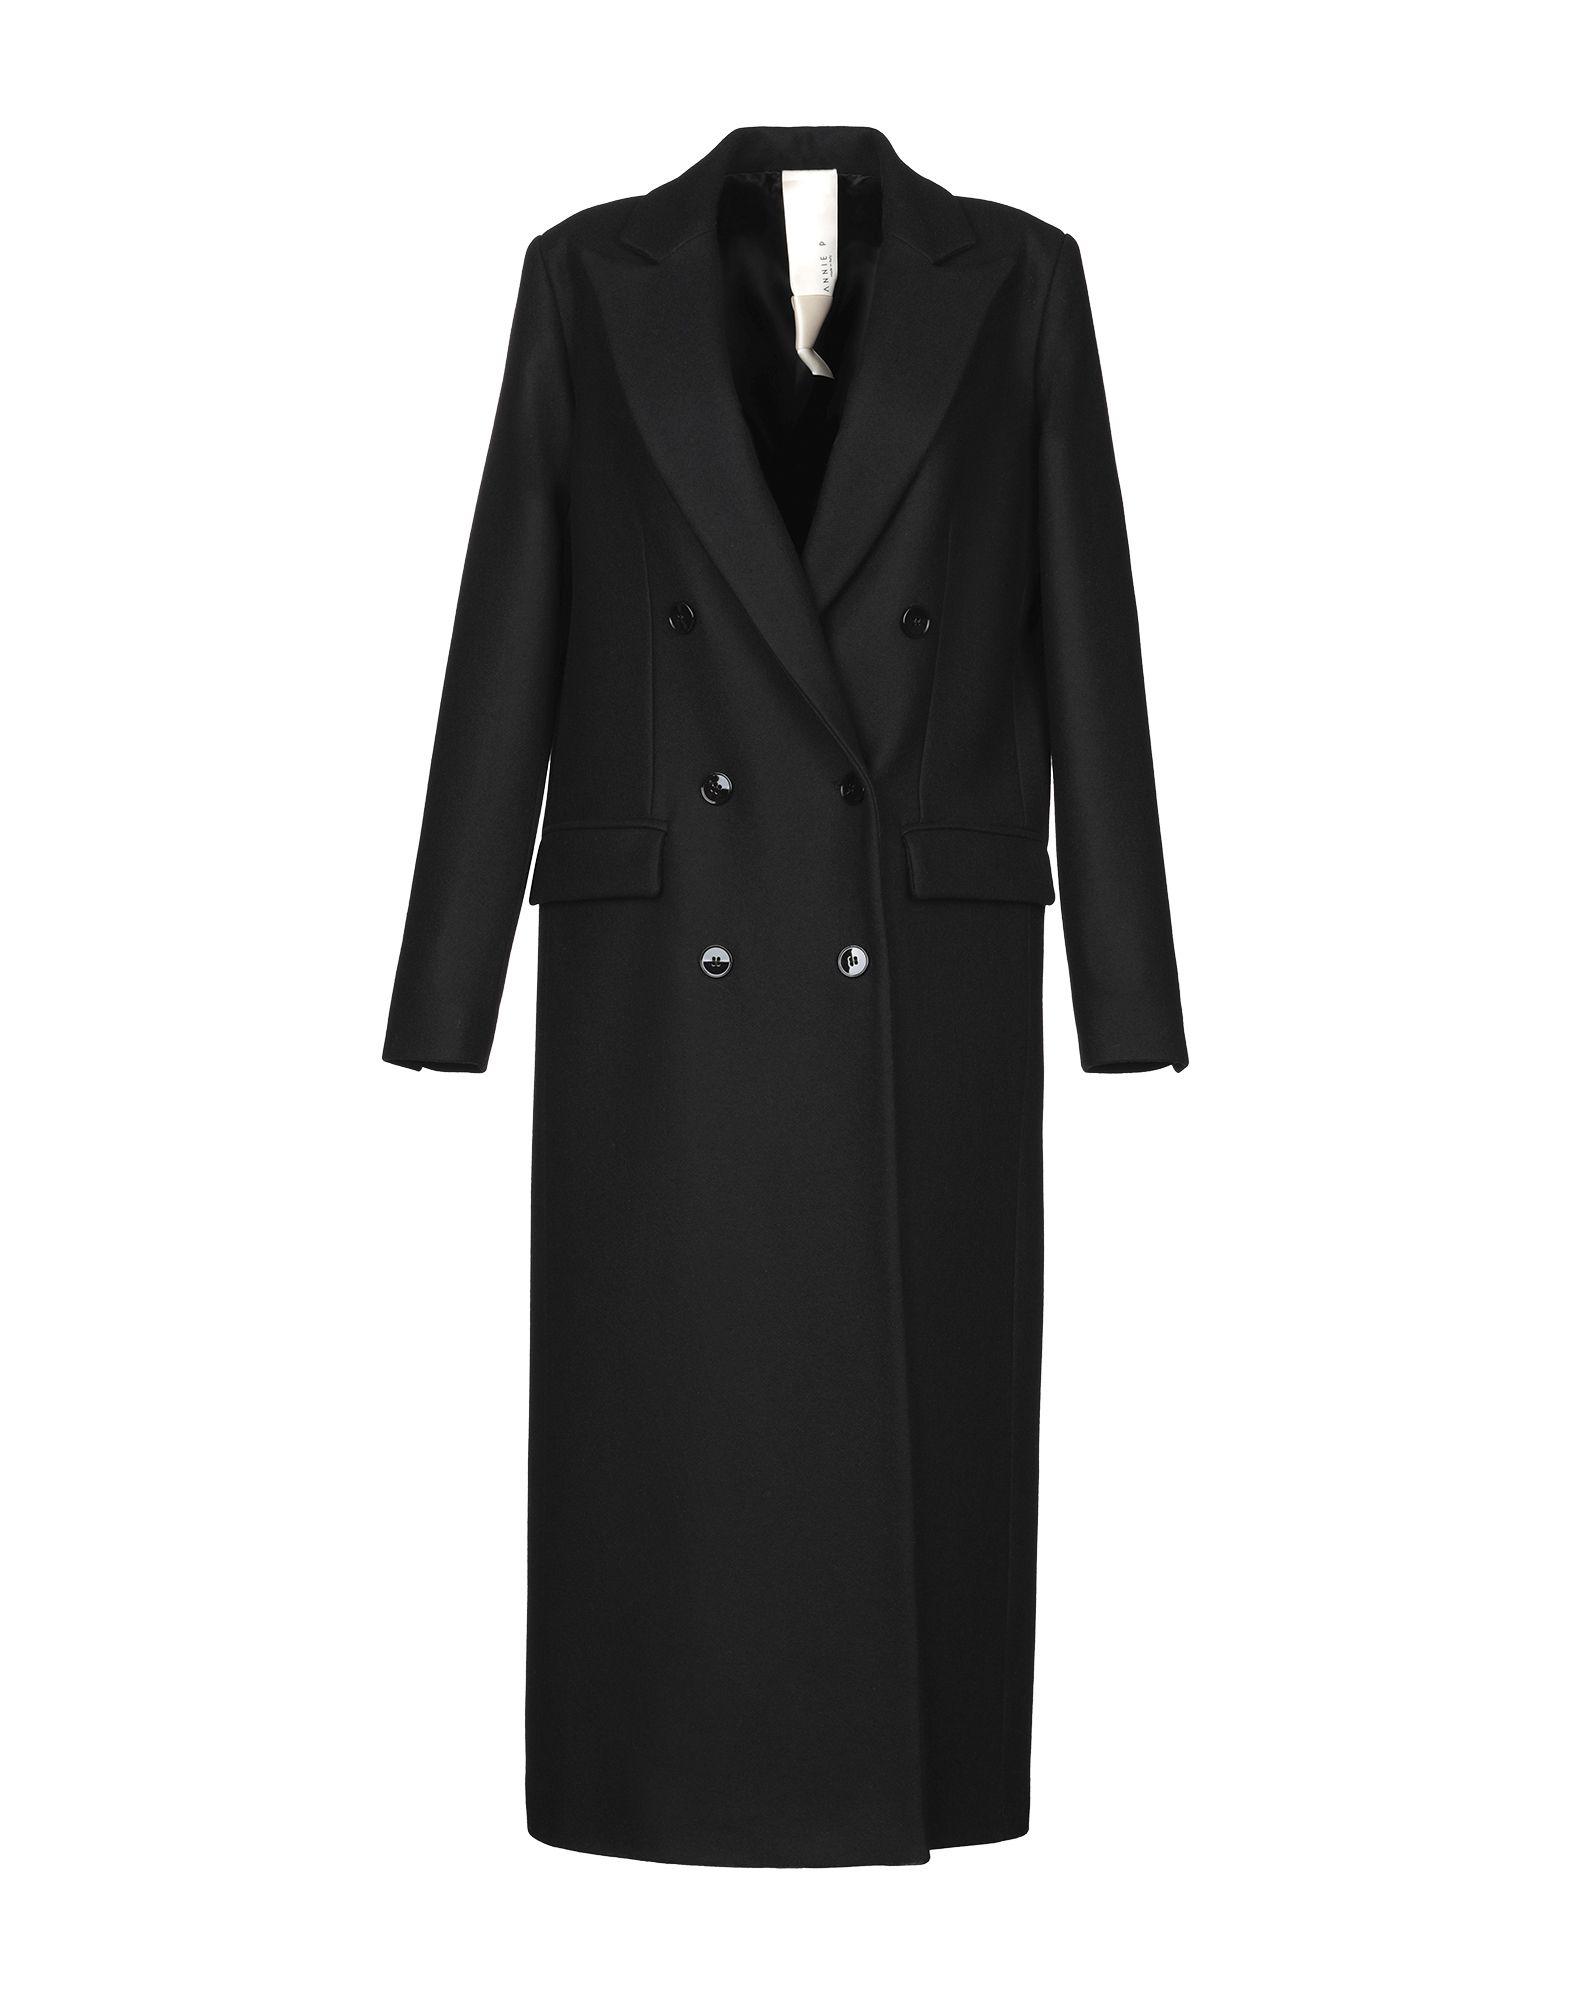 Annie P Coat in Black - Lyst